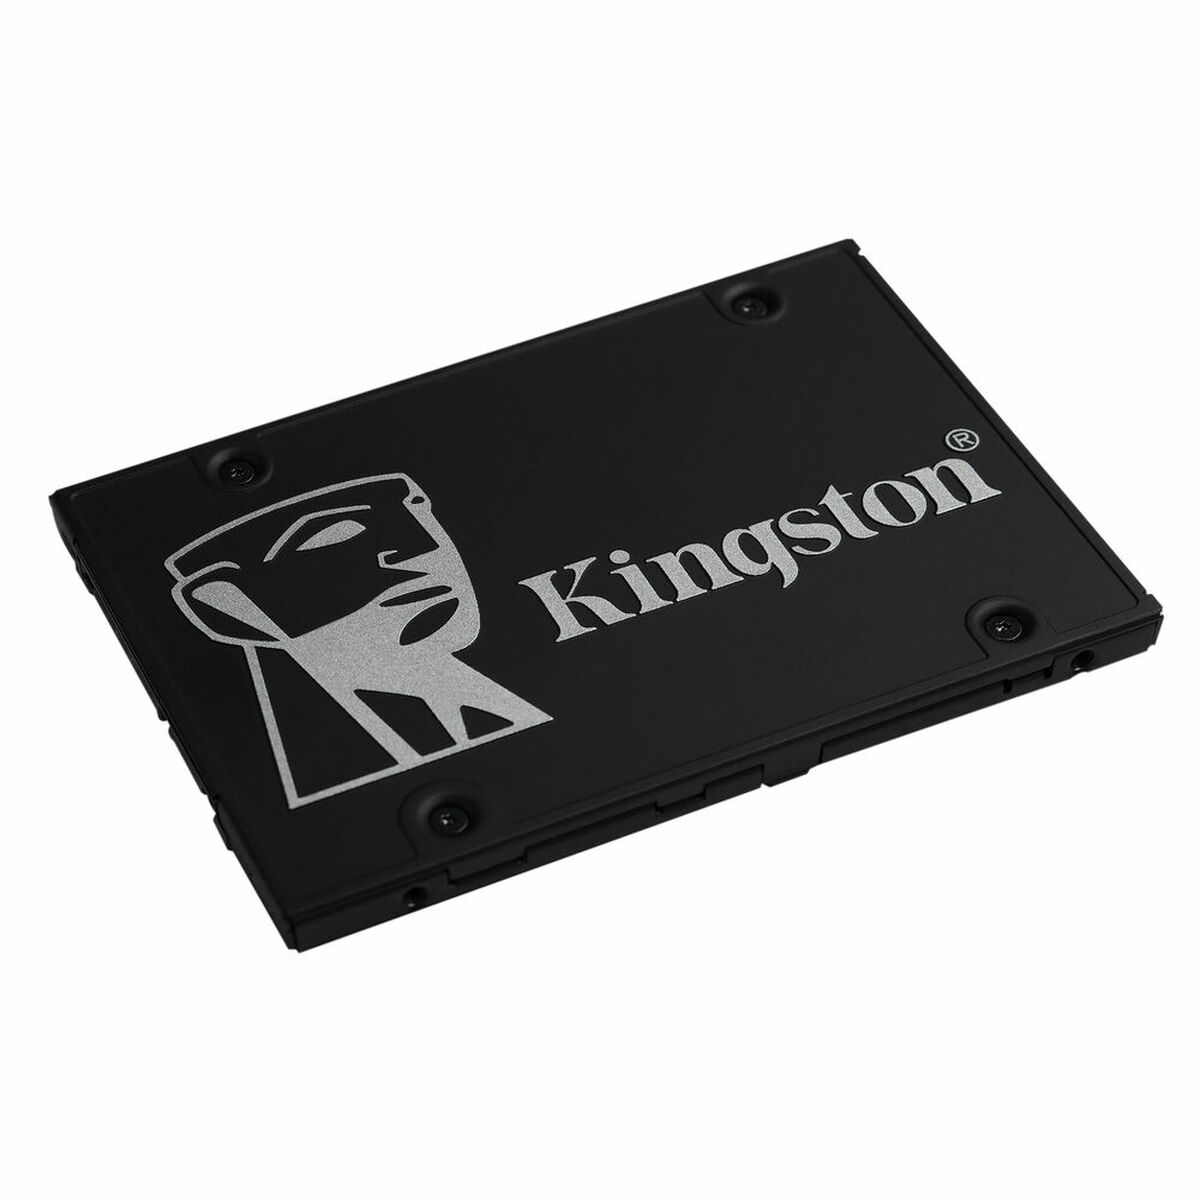 Hard Drive Kingston KC600 2 TB SSD